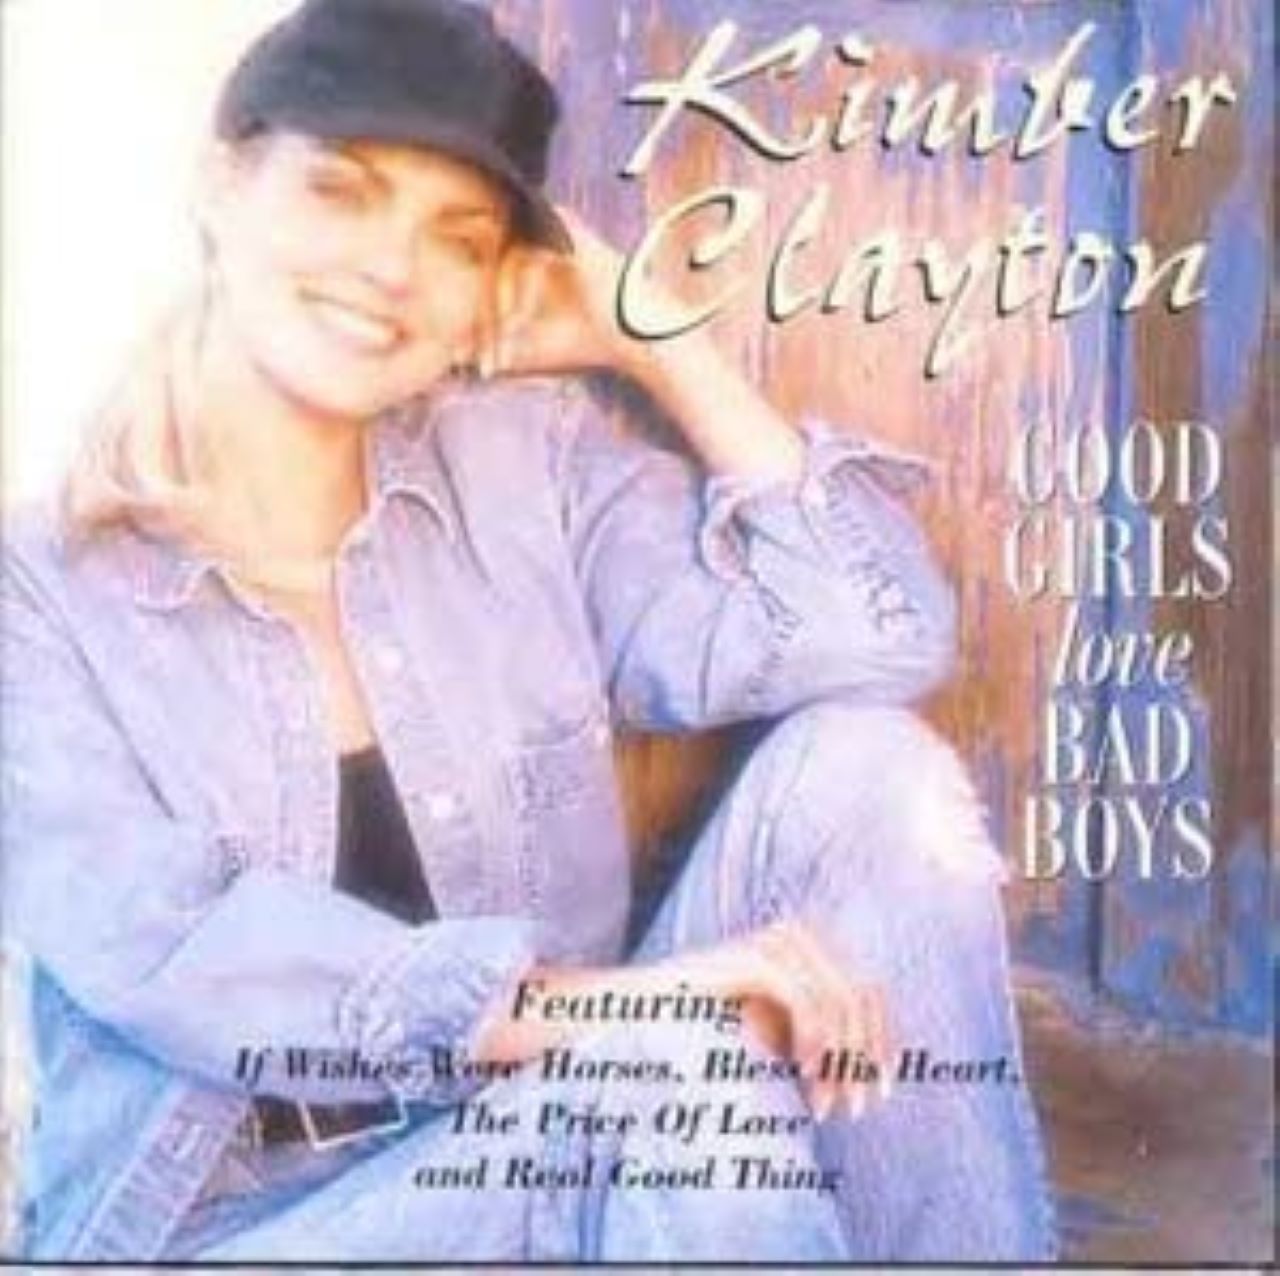 Kimber Clayton - Good Girls Love Bad Boys cover album